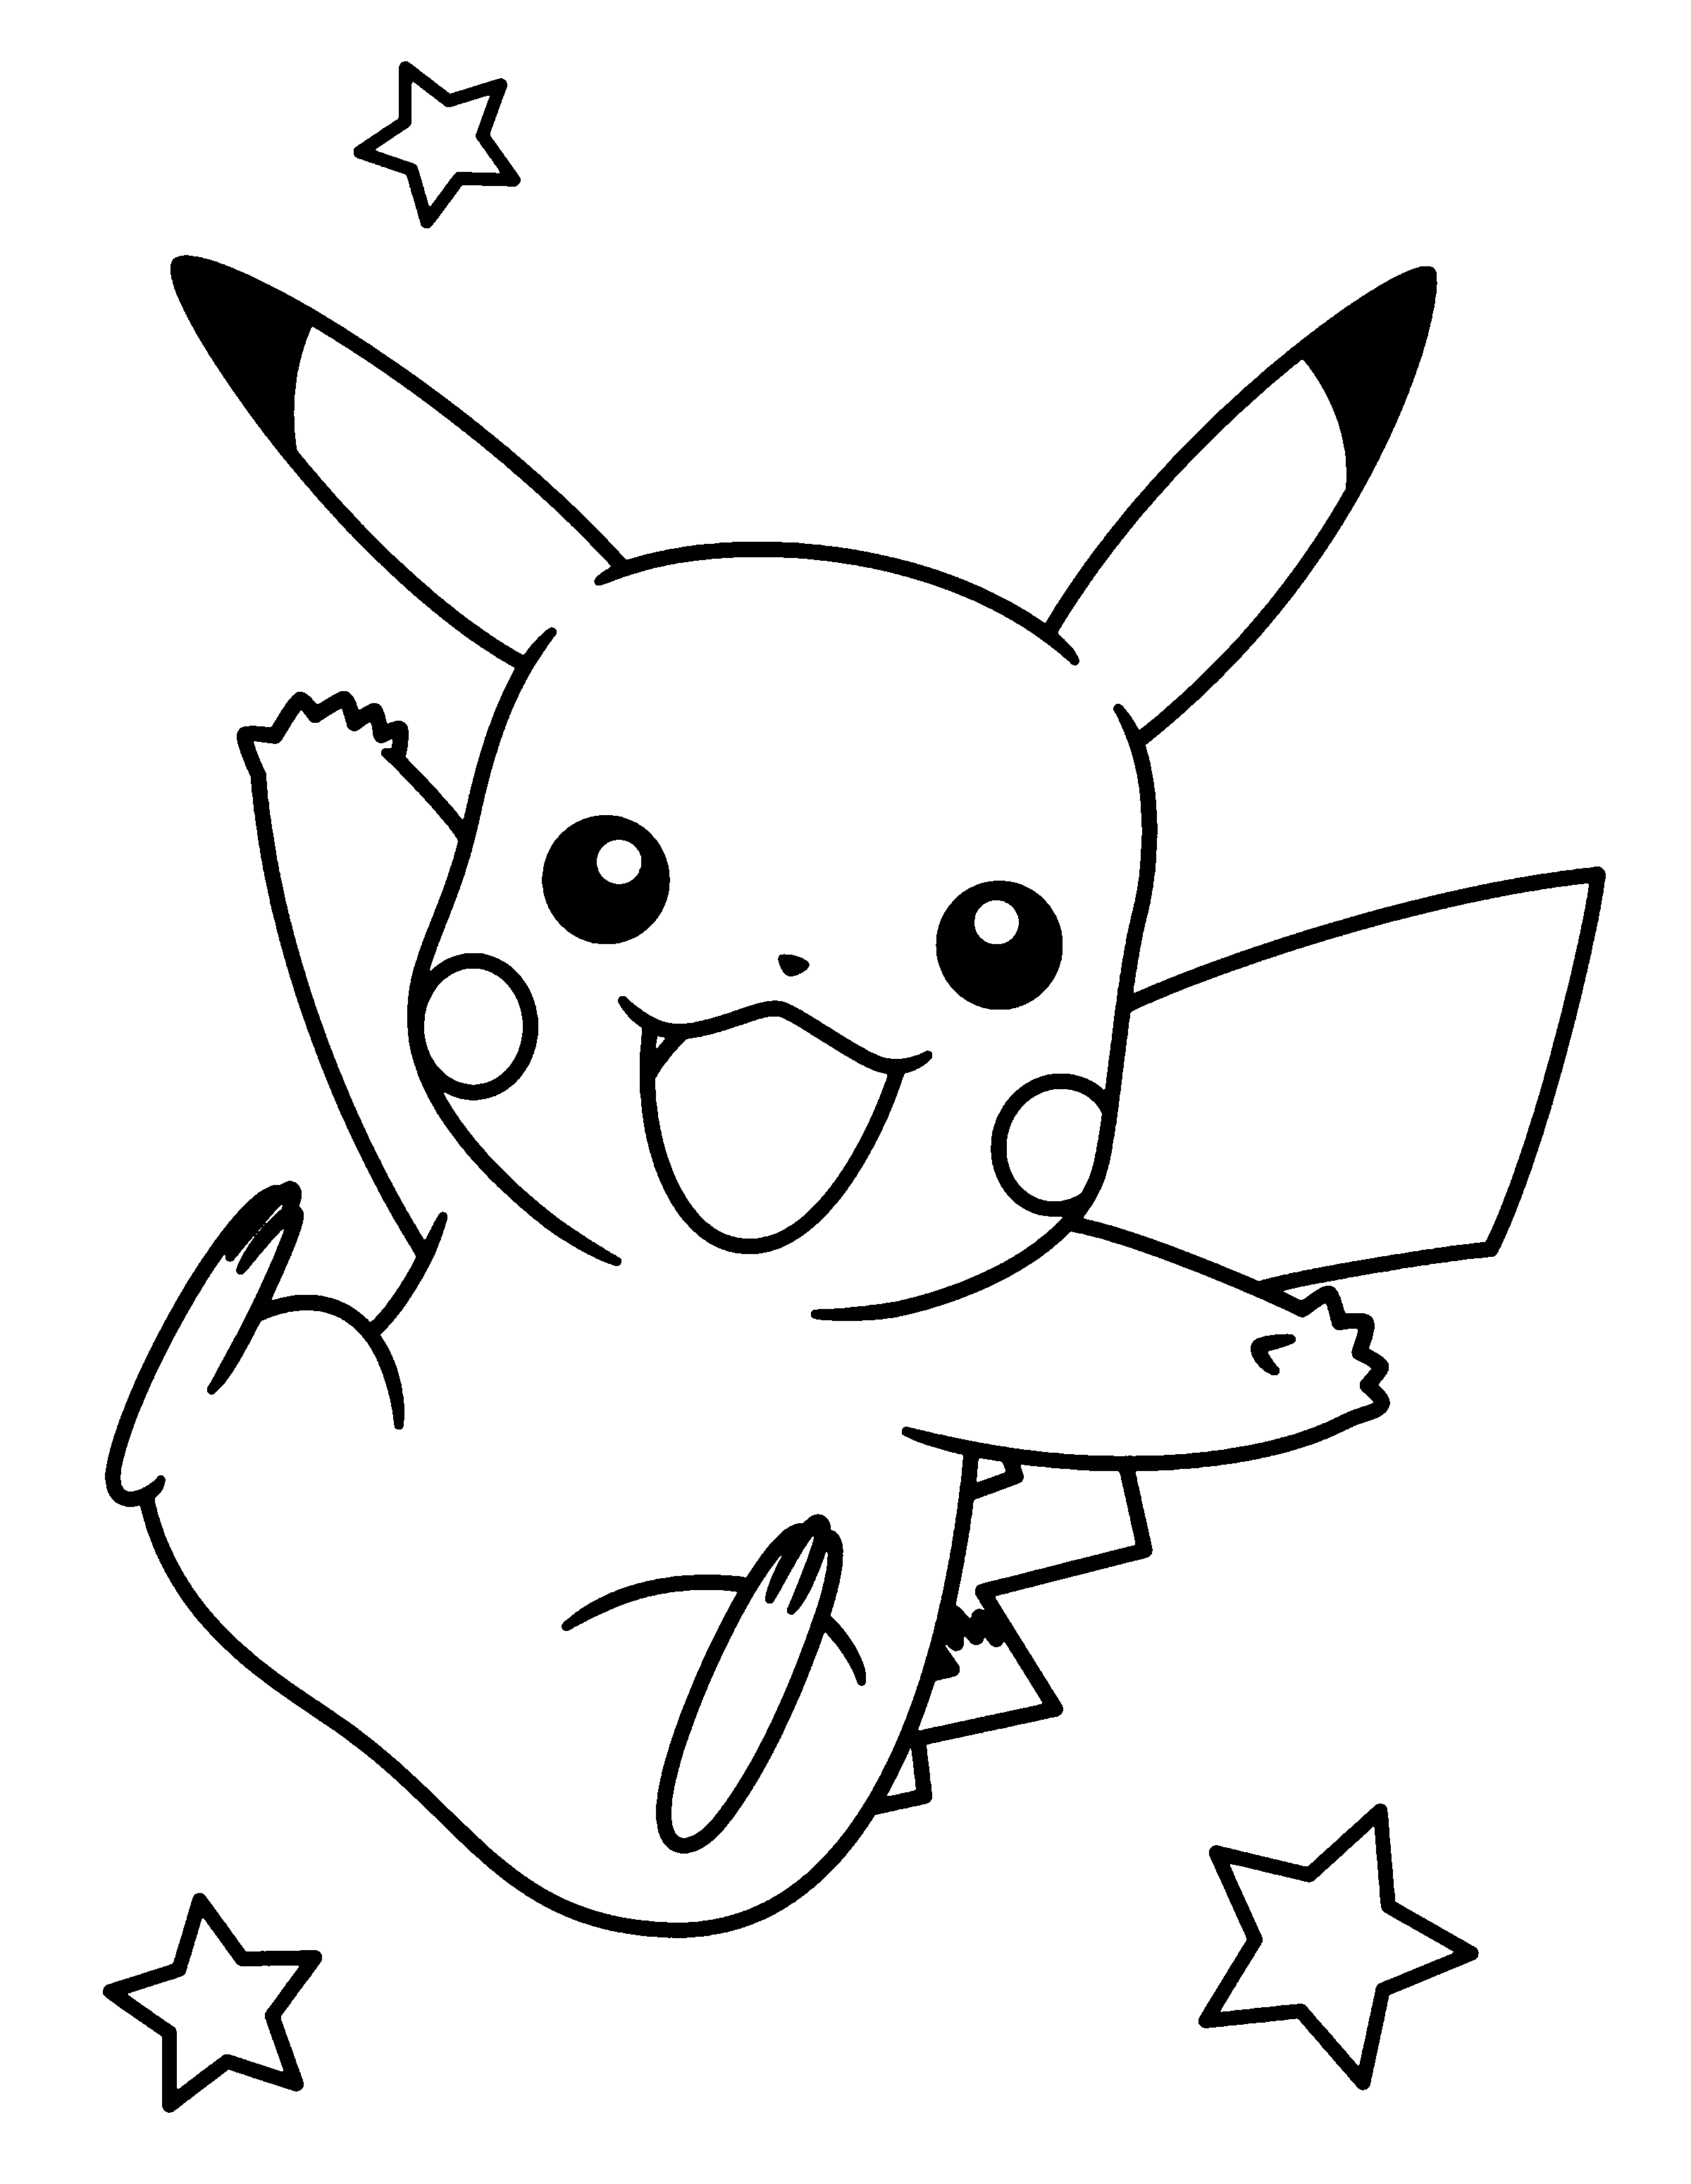 Howto draw pokemon pikachu images crazy gallery pãginas para colorear de pokemon pãginas para colorear lindas dibujos para colorear pokemon